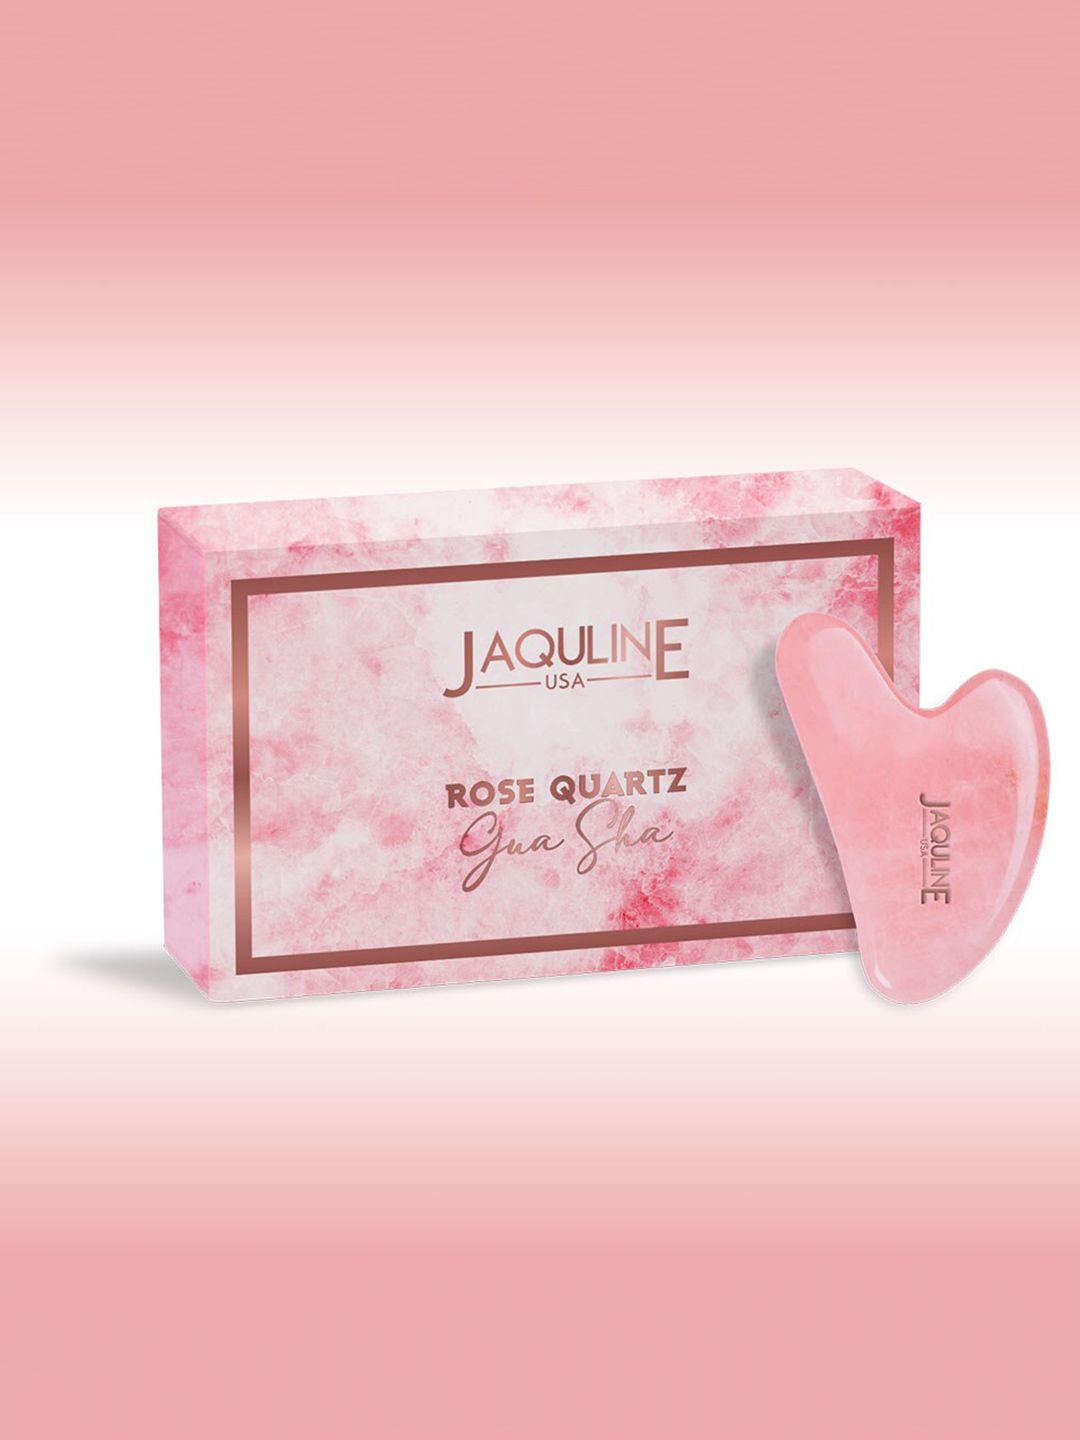 jaquline usa rose quartz gua sha stone